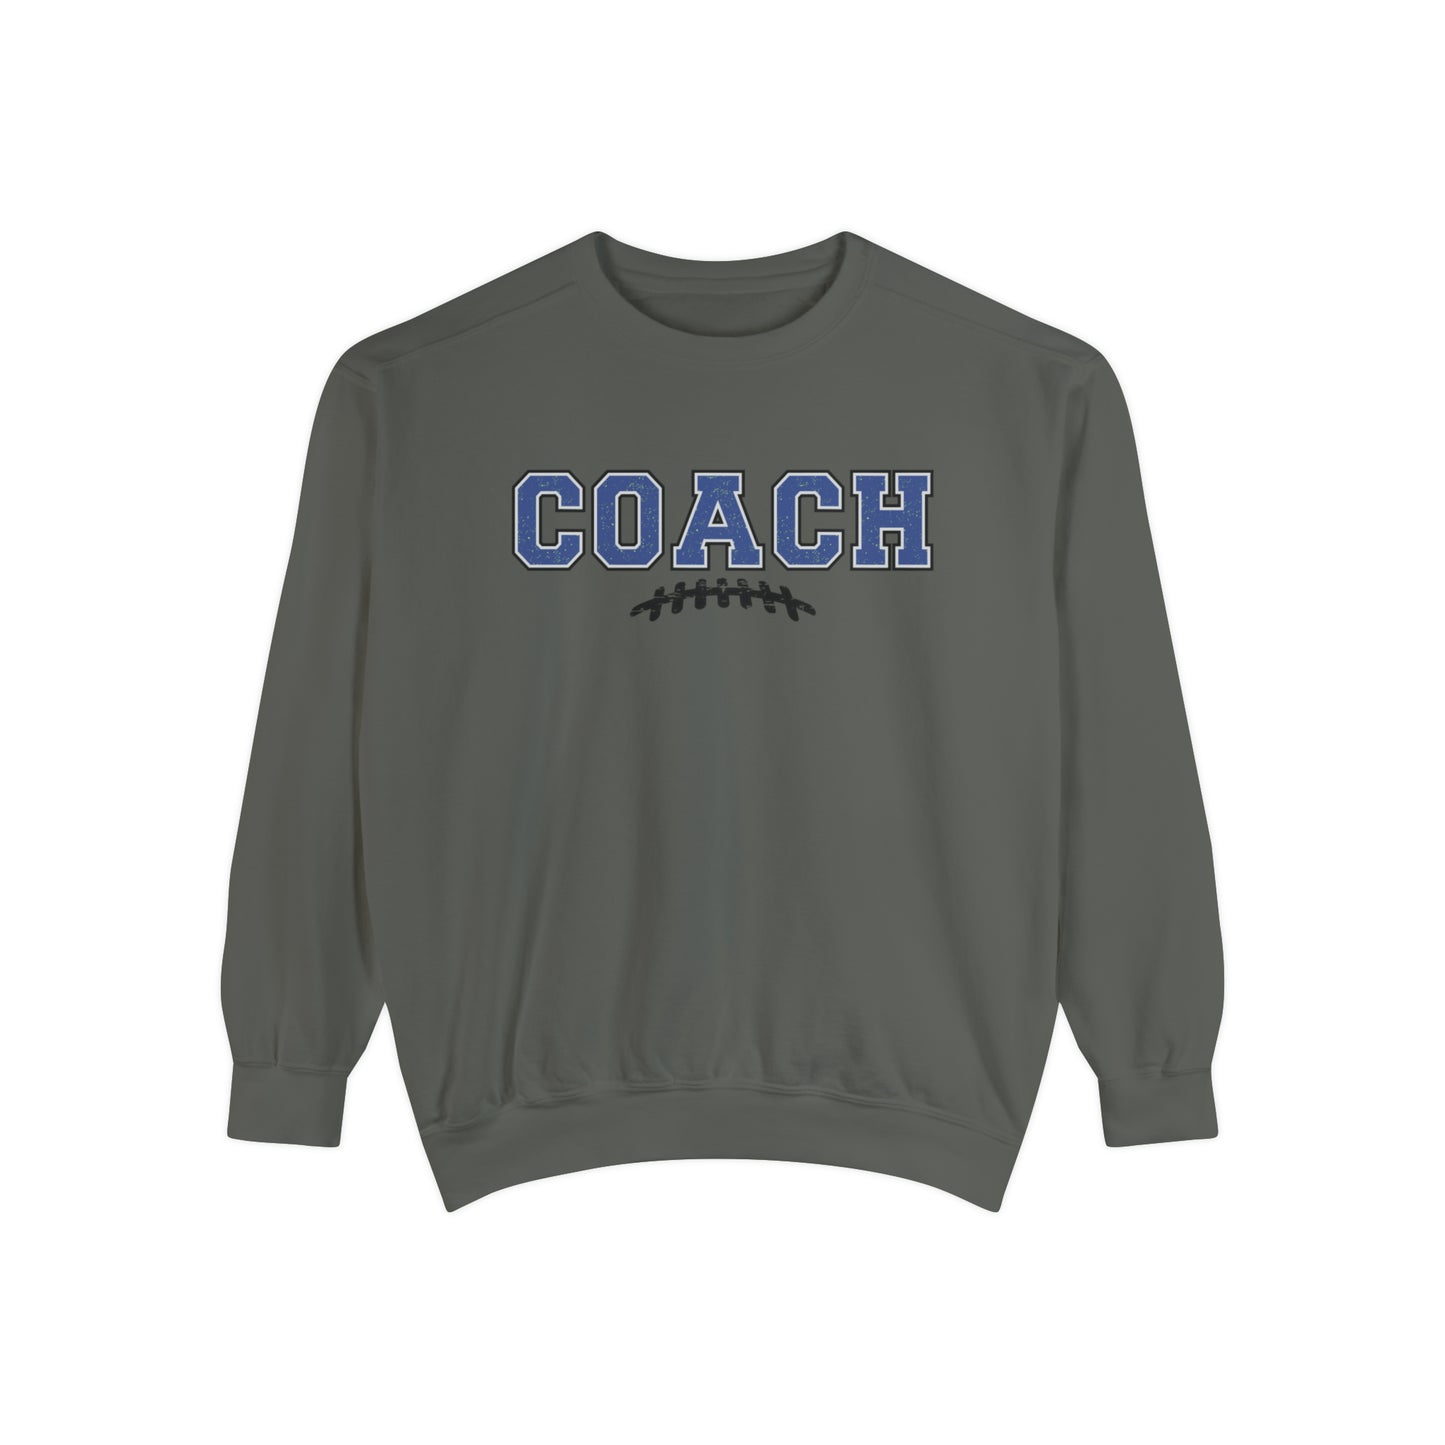 Gridiron Glory Premium Coach Men's Comfort Colors Sweatshirt - Eddy and Rita